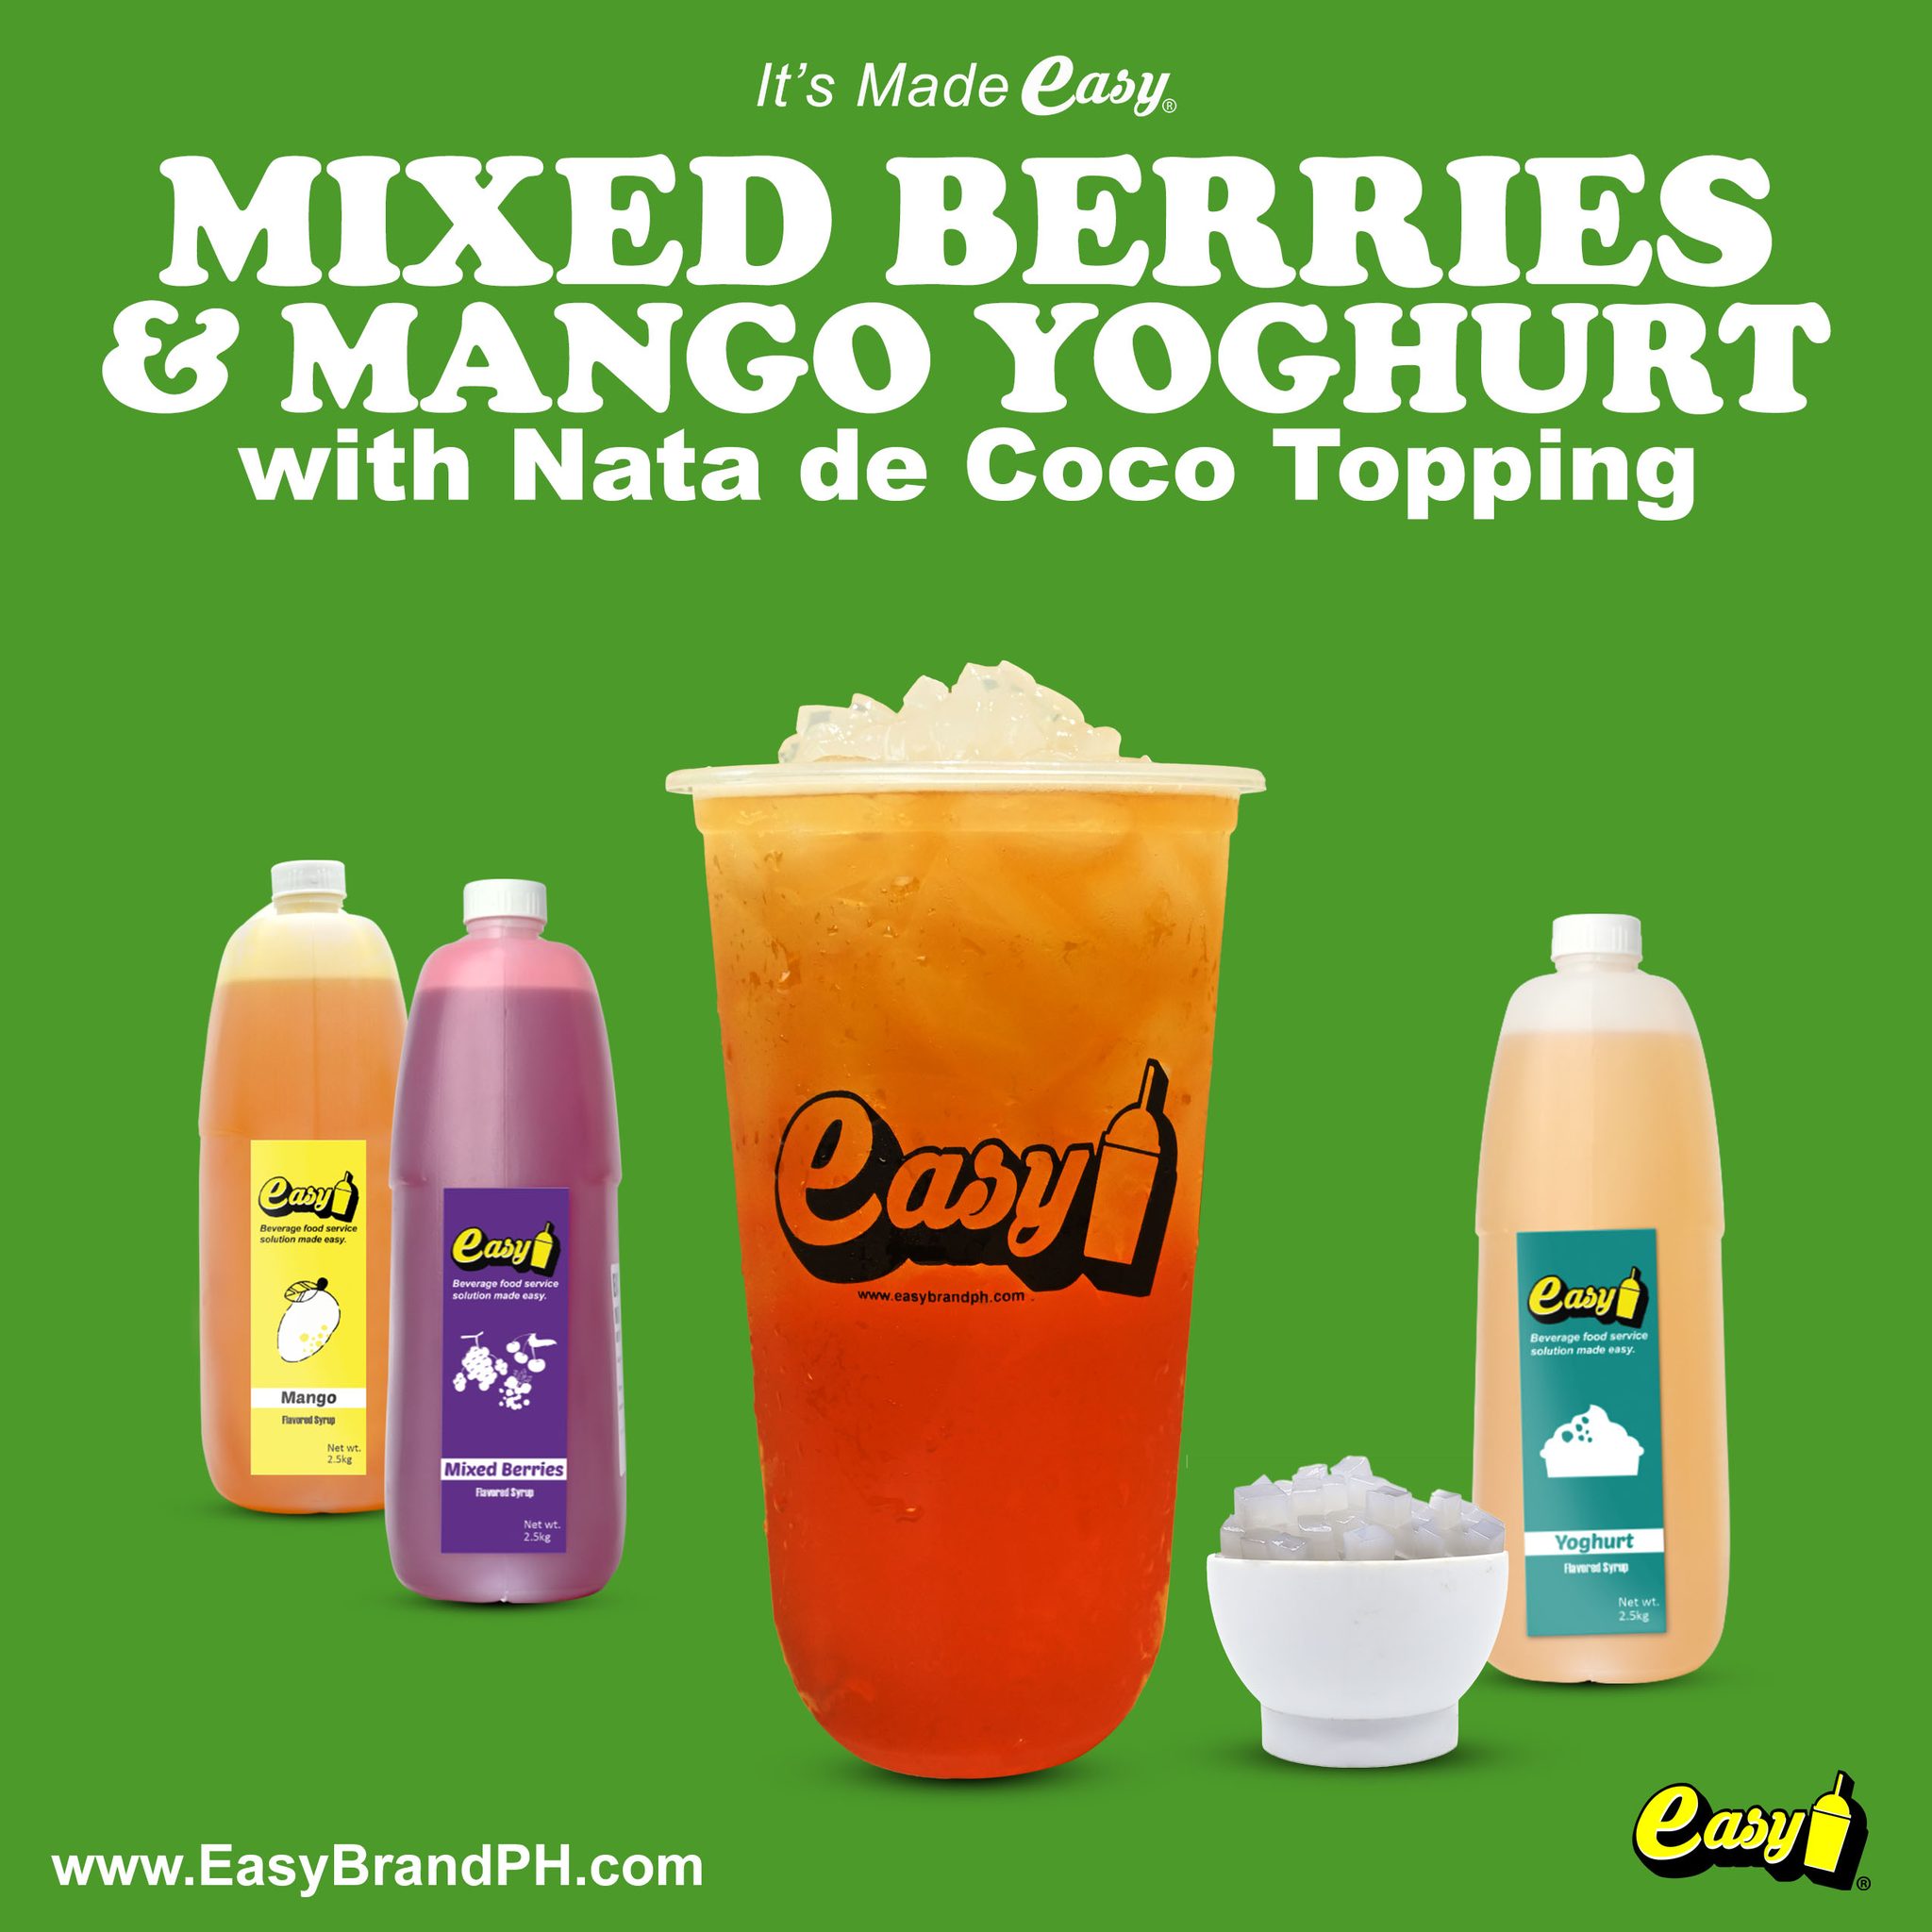 Mixed Berries & Mango Yoghurt